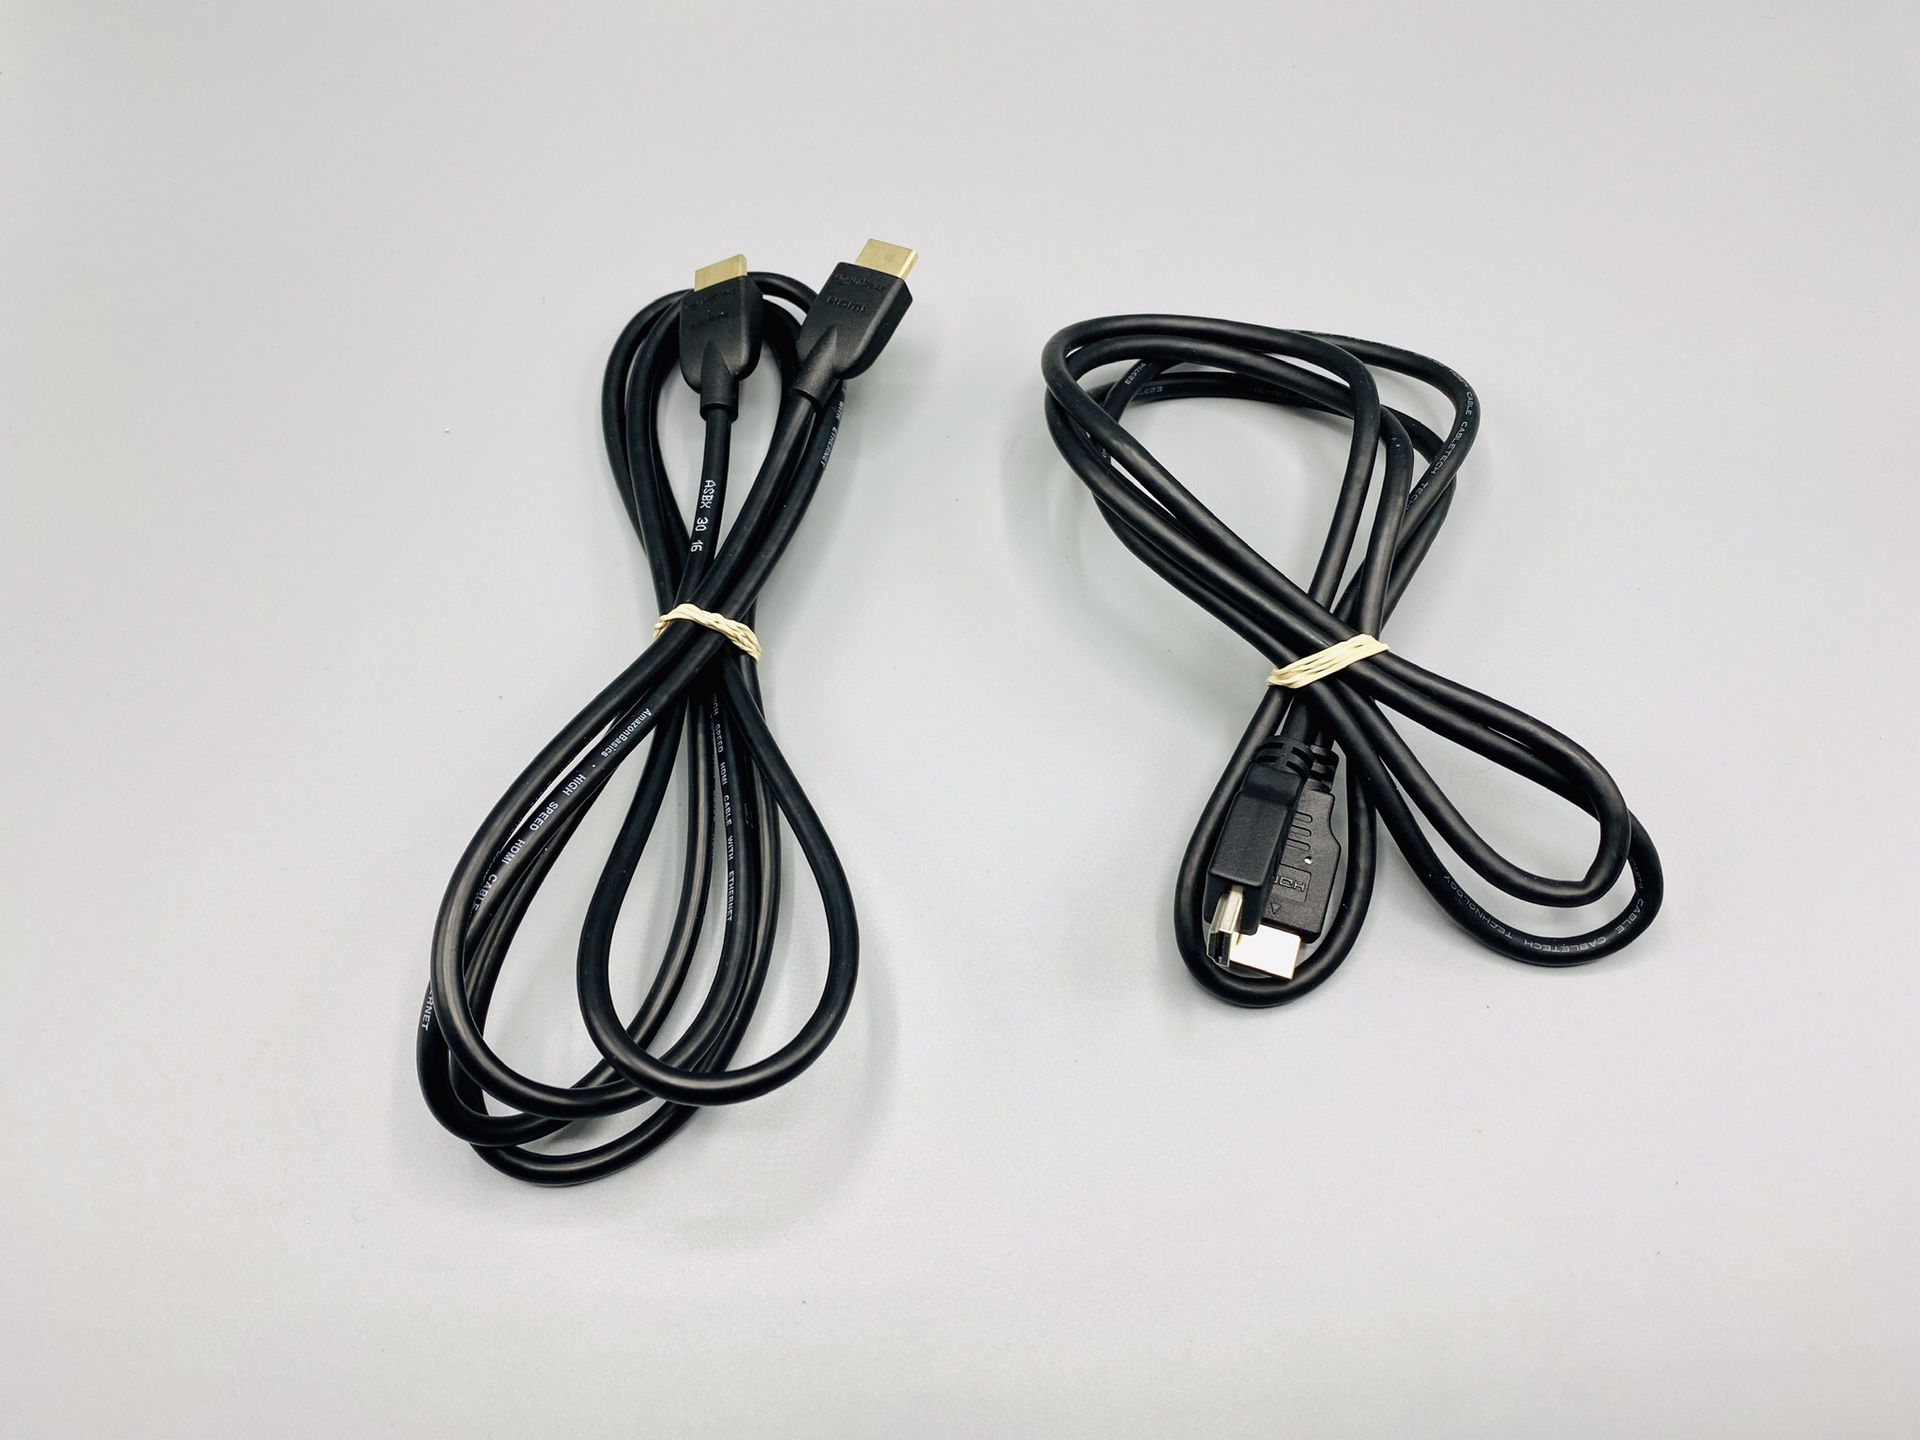 Amazon Basics HDMI Cable Cord Set